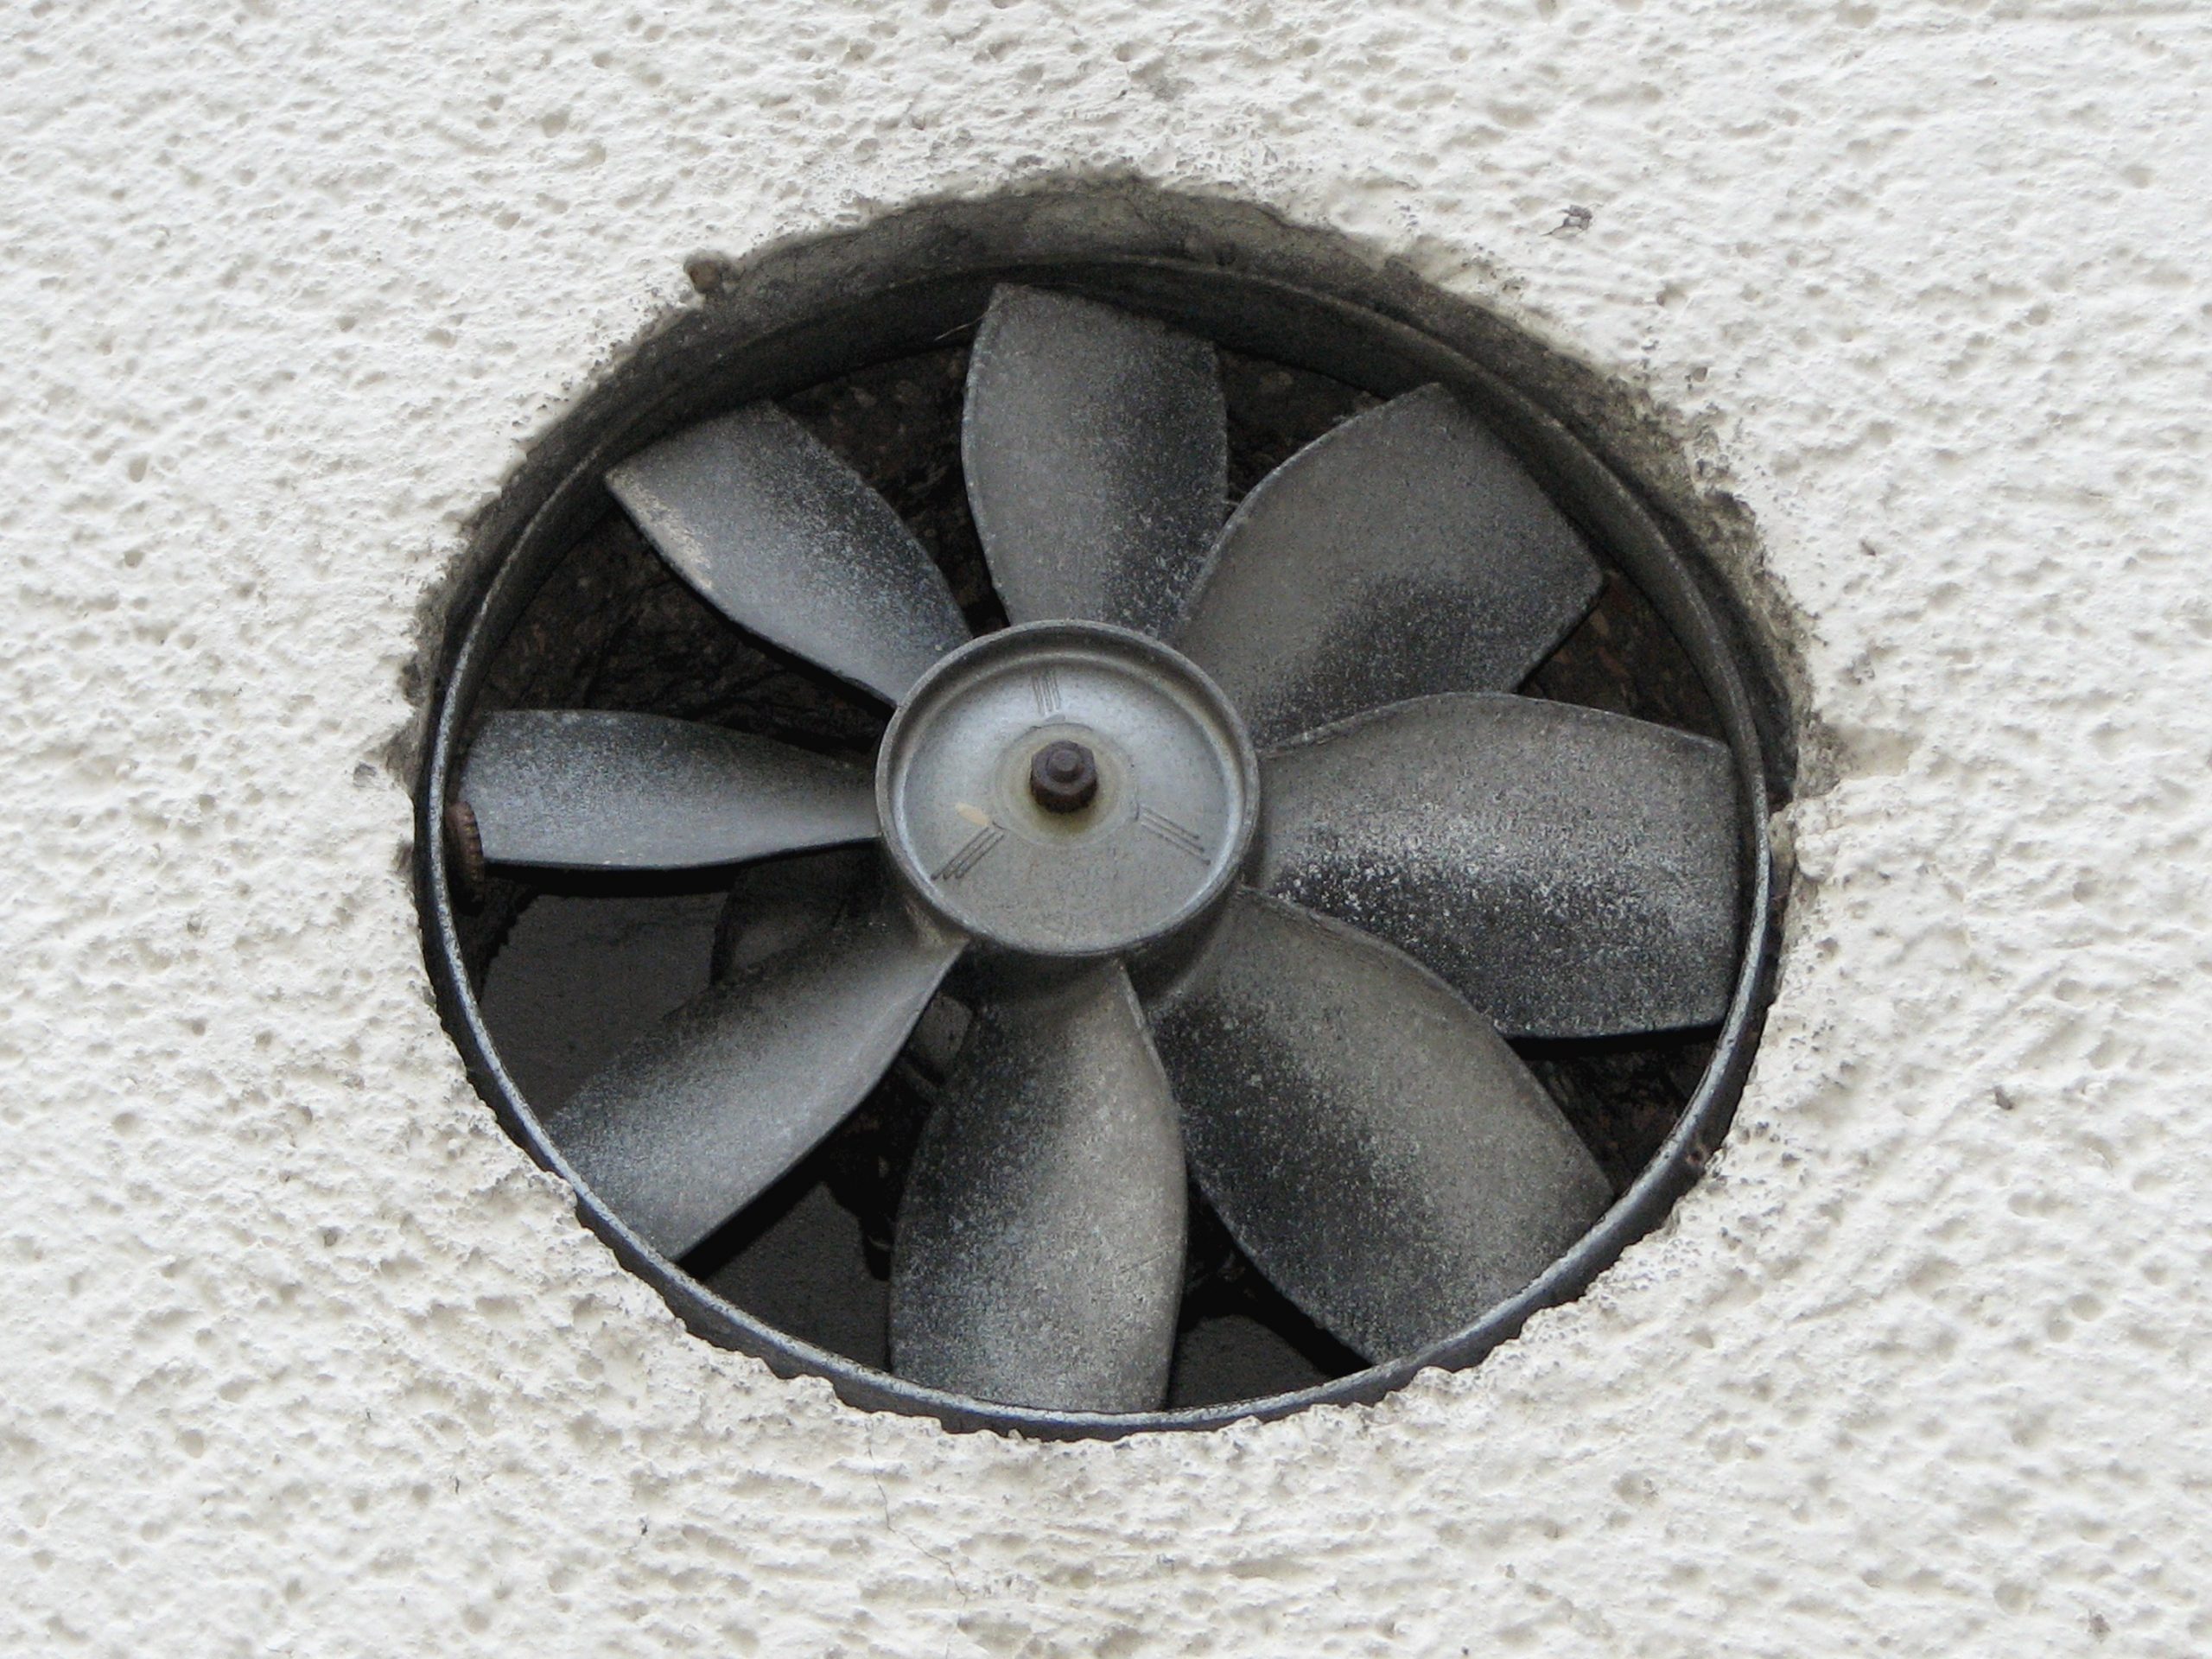 Fileexhaust Fan On Side Wall Wikimedia Commons with sizing 2816 X 2112